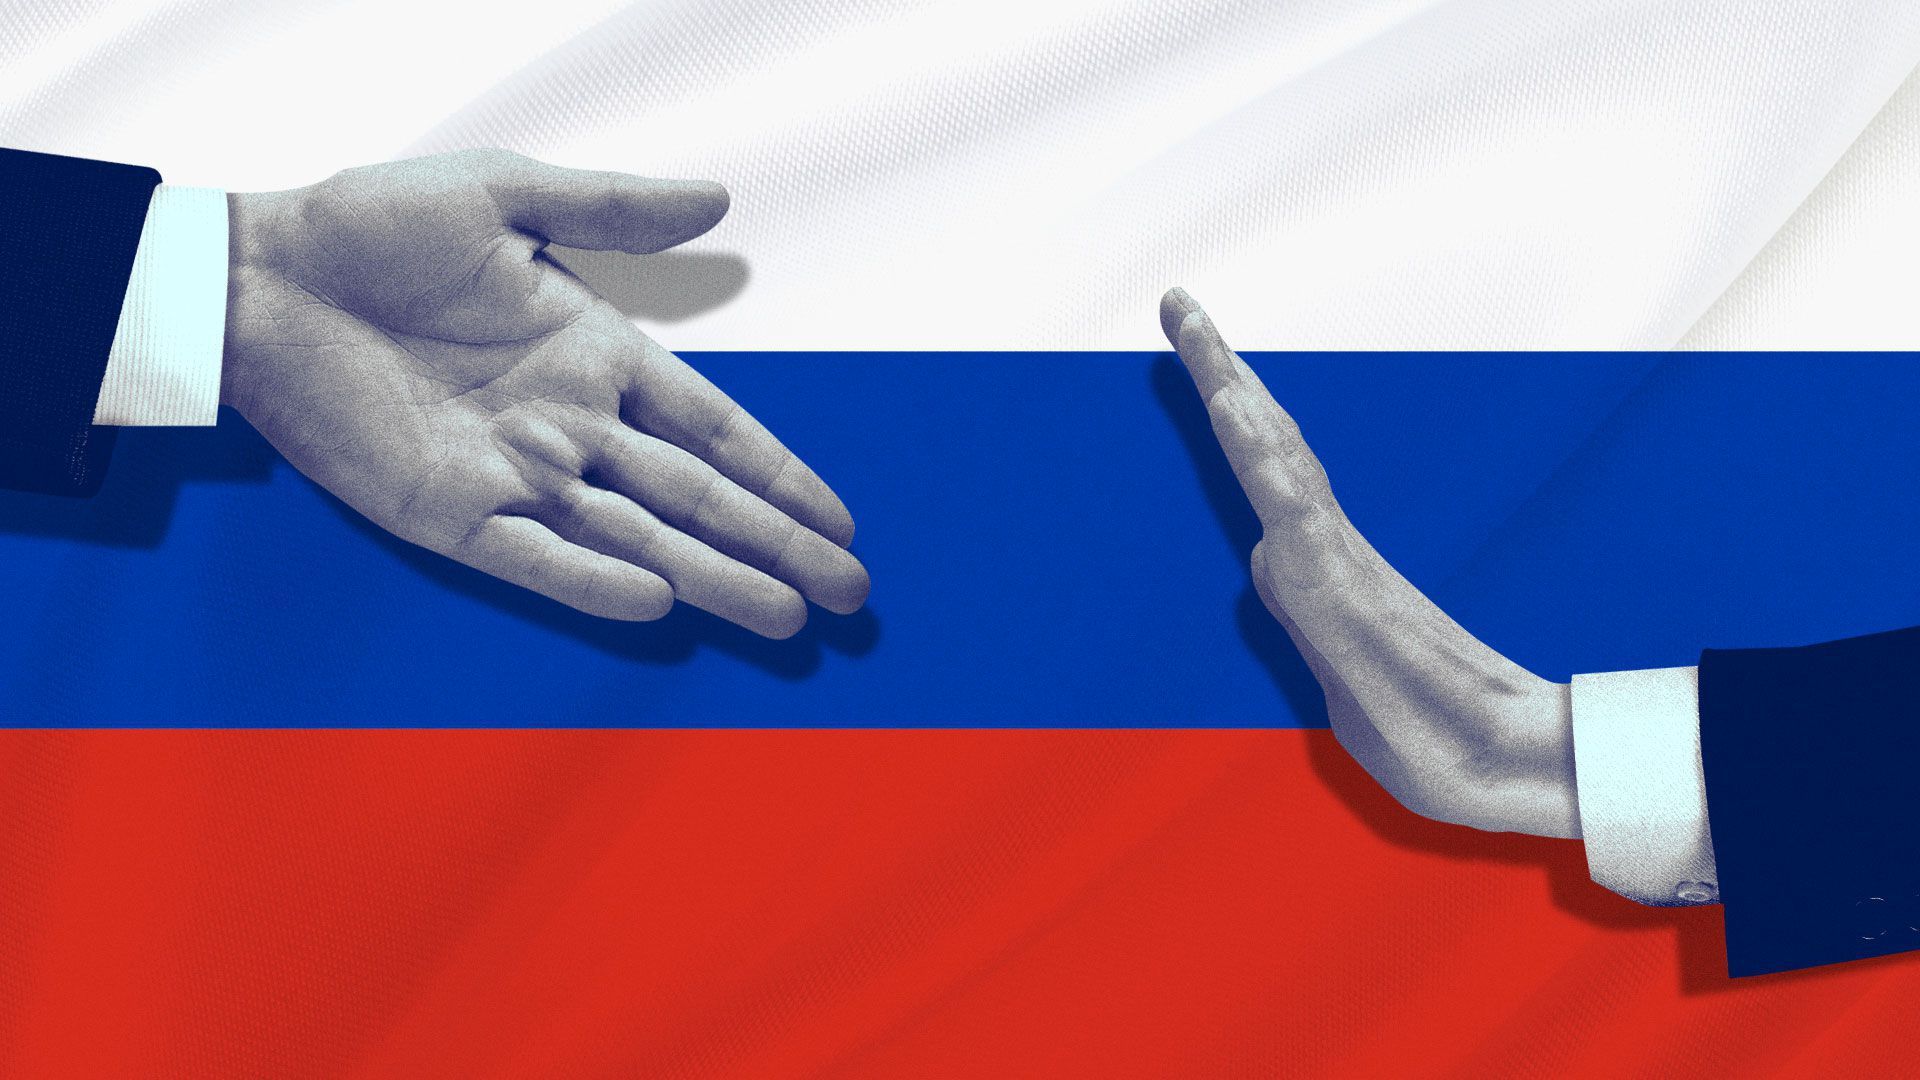 Hand extending over Russian flag